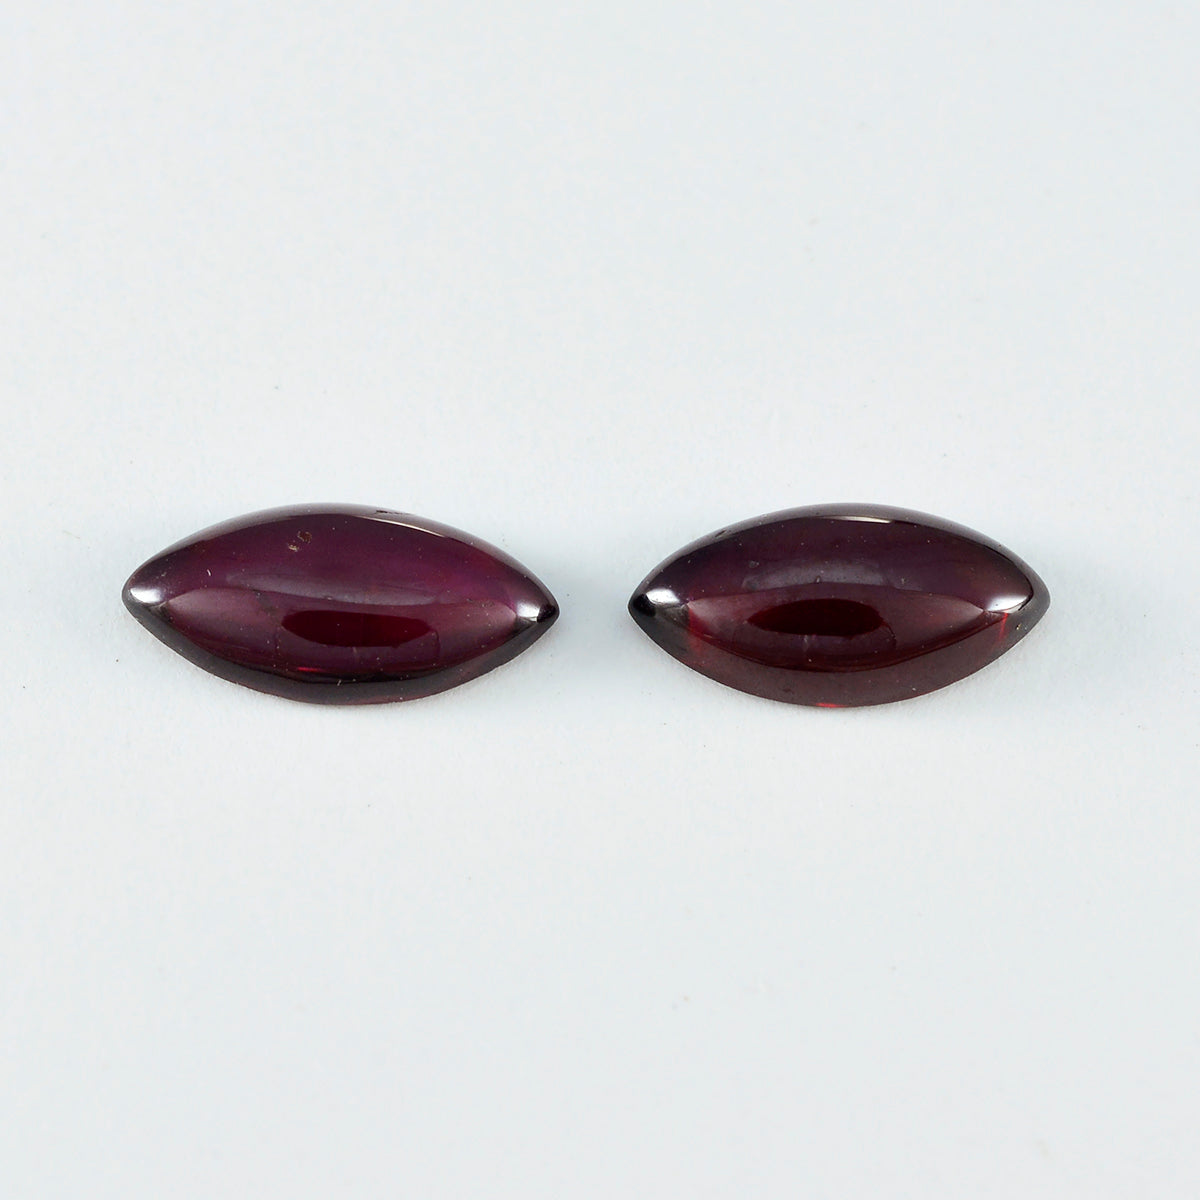 Riyogems 1PC Red Garnet Cabochon 10x20 mm Marquise Shape Good Quality Gems